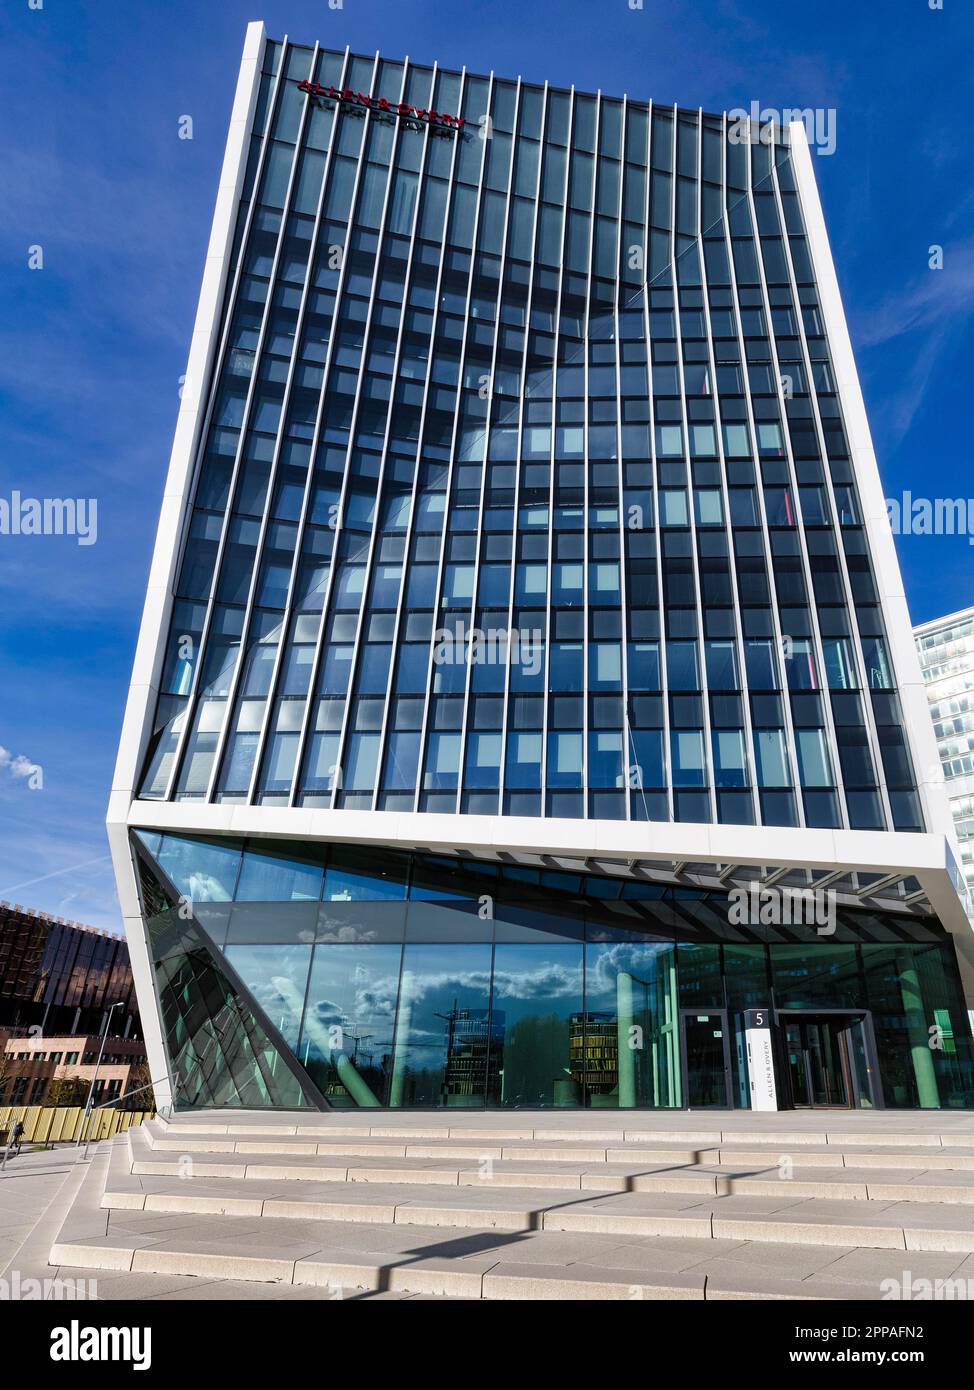 Büroturm, Anwaltskanzlei Allen & Overy Luxembourg, moderne Architektur, Avenue John F. Kennedy, Europäisches Viertel Kirchberg Plateau, Luxemburg Stockfoto